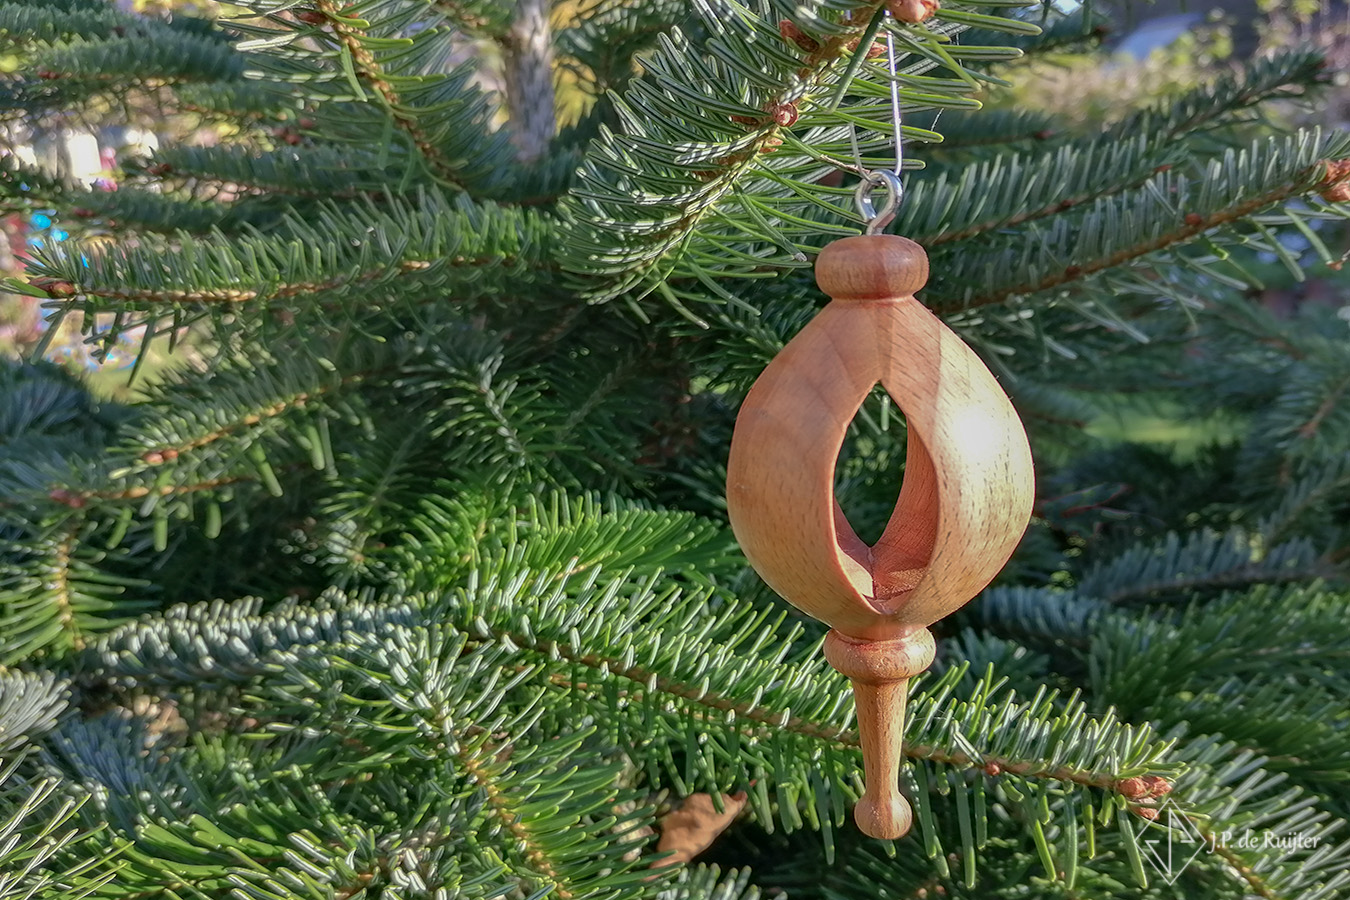 Kerst ornament opengewerkte ovale bol van eikenhout, kunst, houtdraaien. In kerstboom.